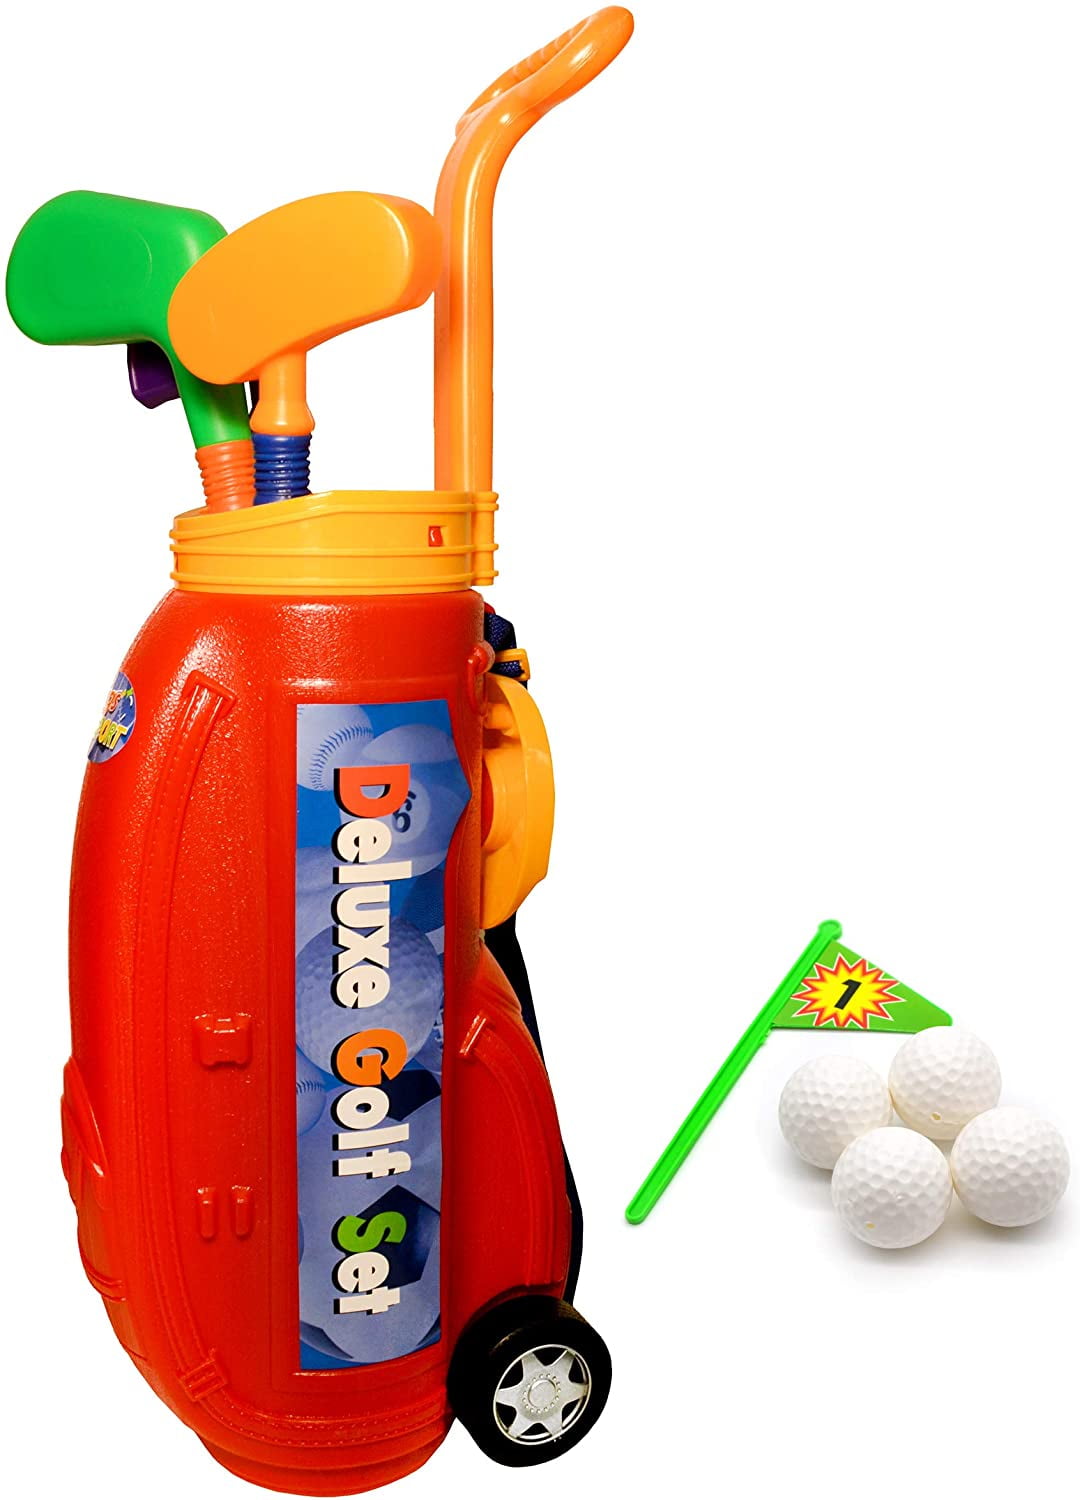 toy golf clubs